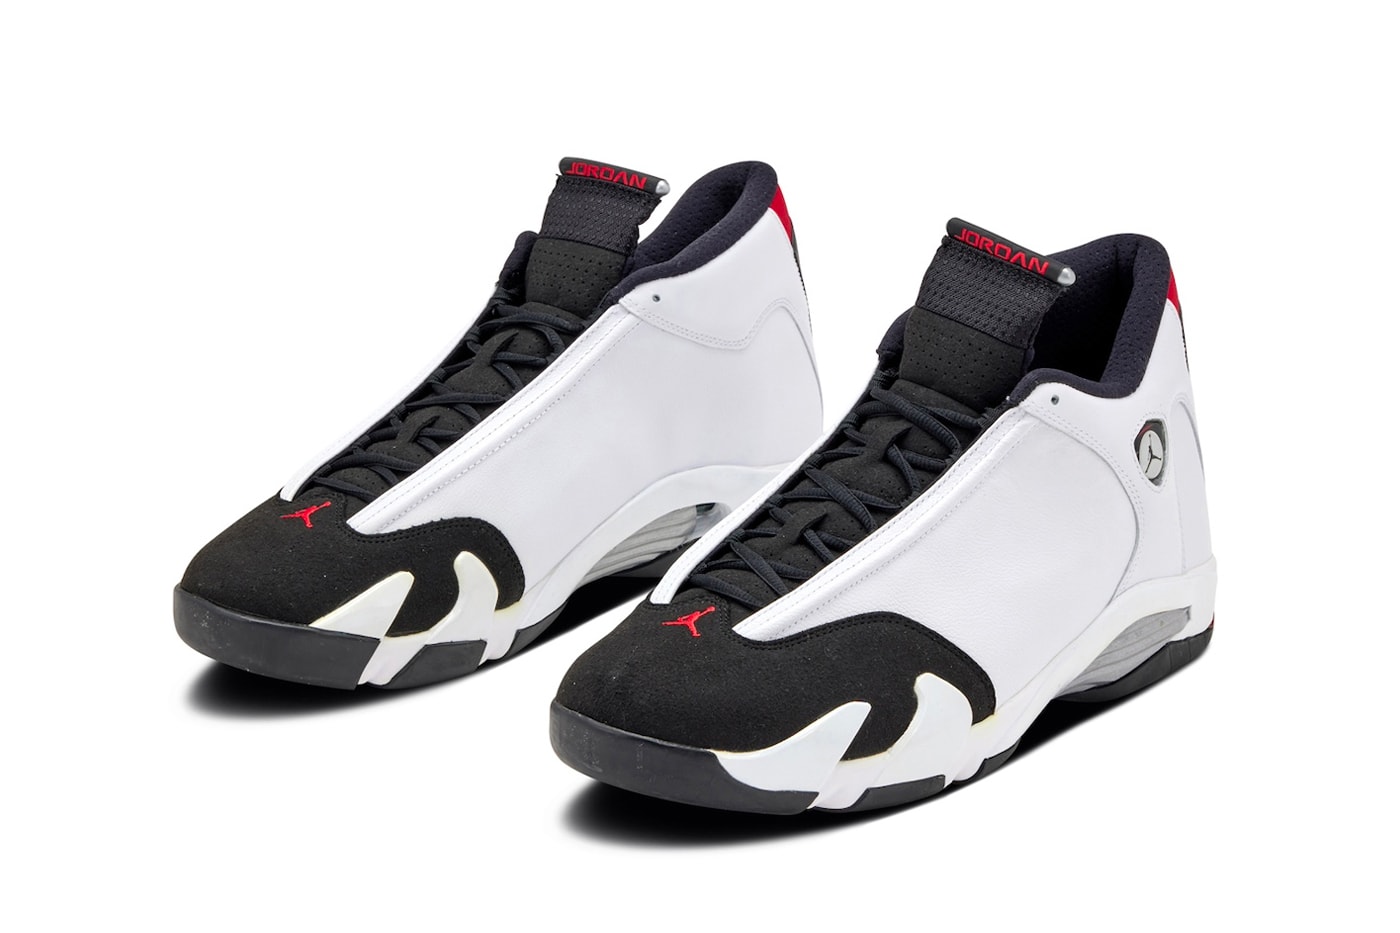 Air Jordan 14 "Black Toe" Slated To Return Later This Year jordan brand michael jordan jumpman hightop basketball shoes 487471-160 White/Black-Varsity Red-Metallic Silver